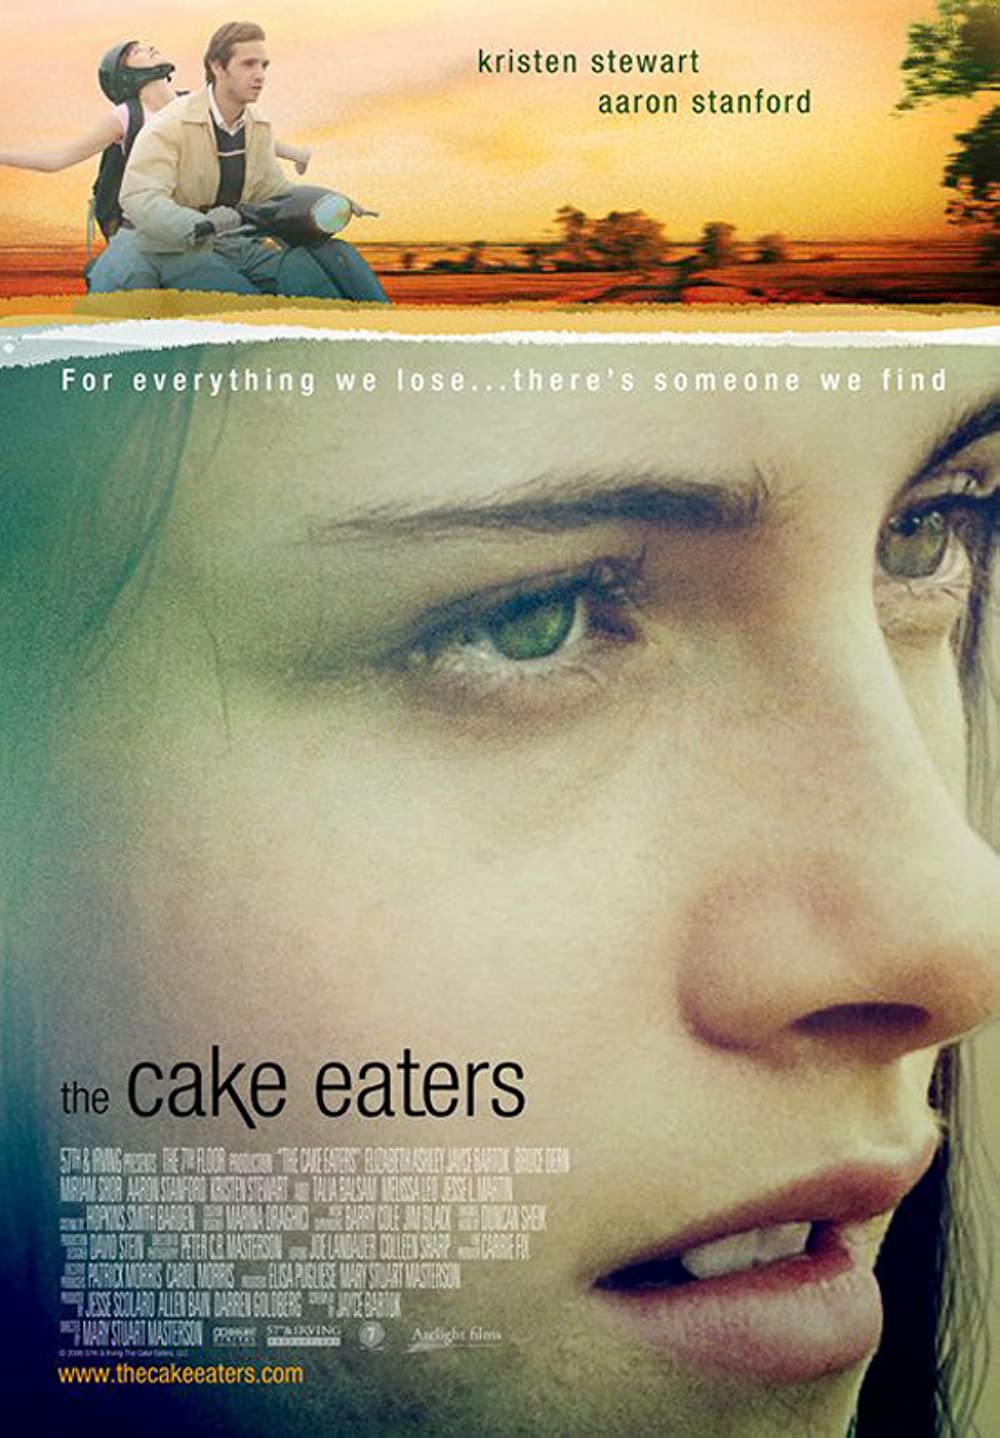 Filmbeschreibung zu The Cake Eaters (OV)